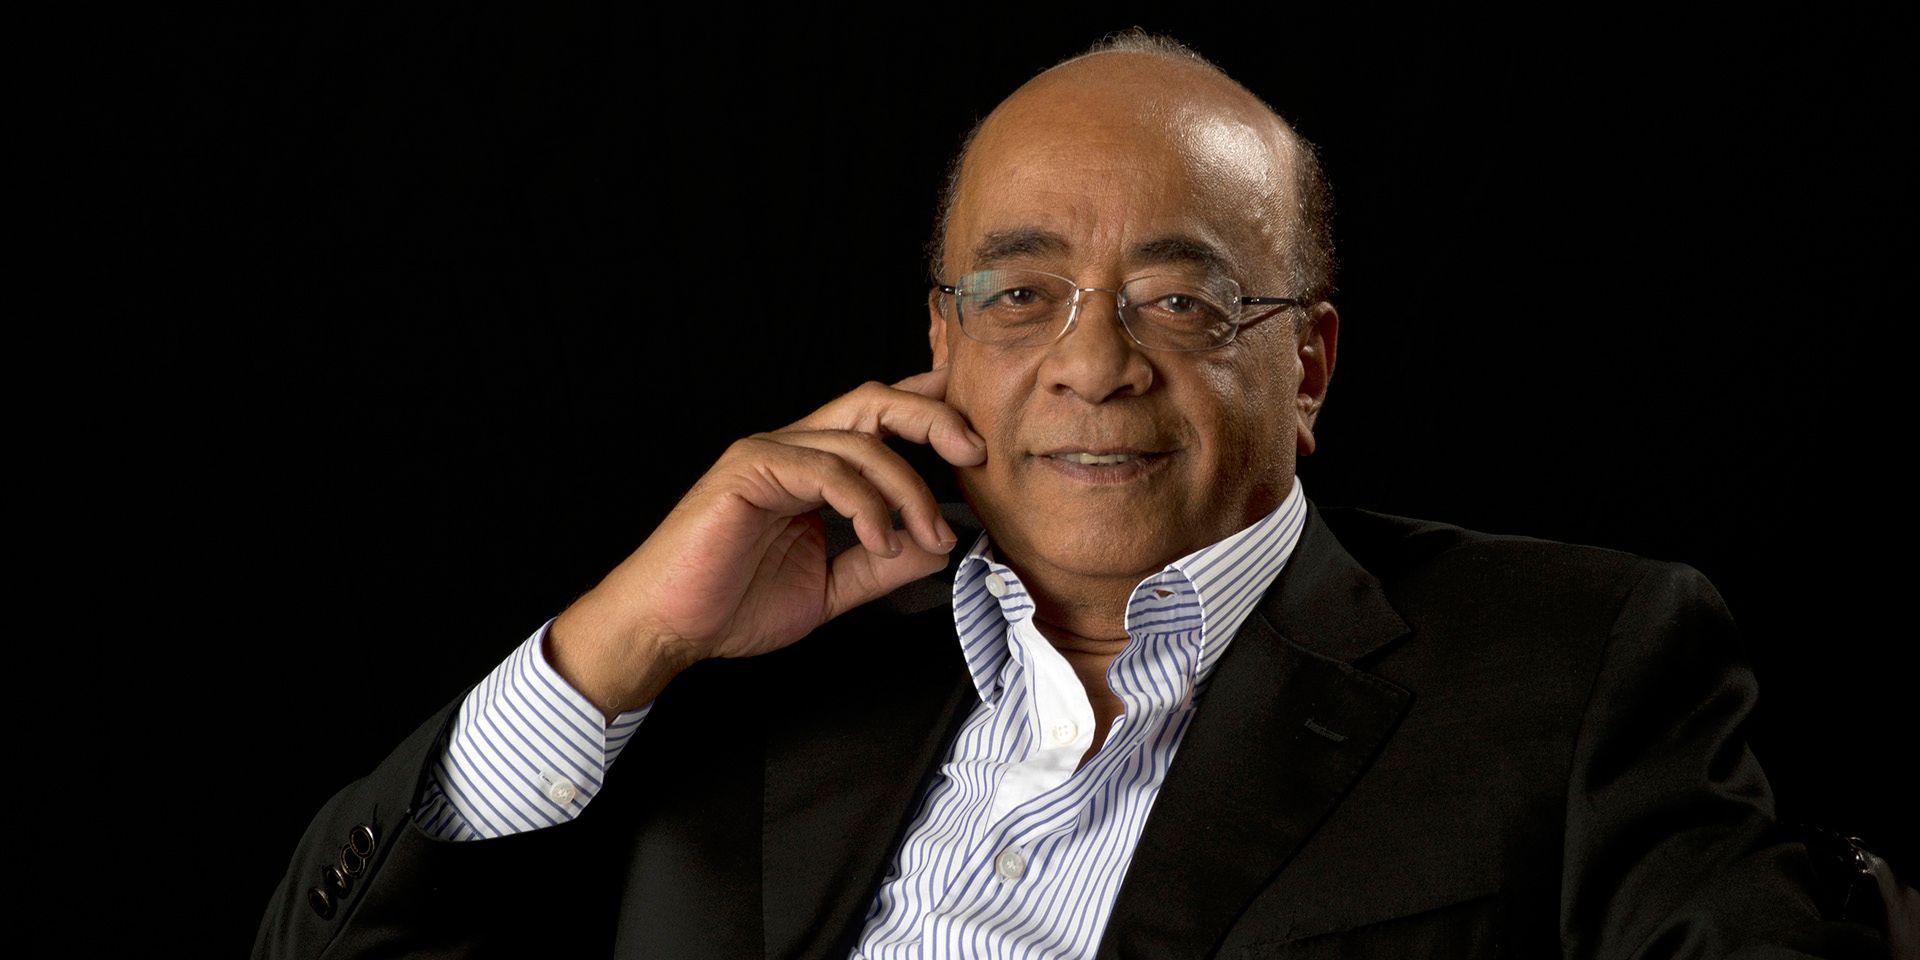 The Mo Ibrahim Foundation